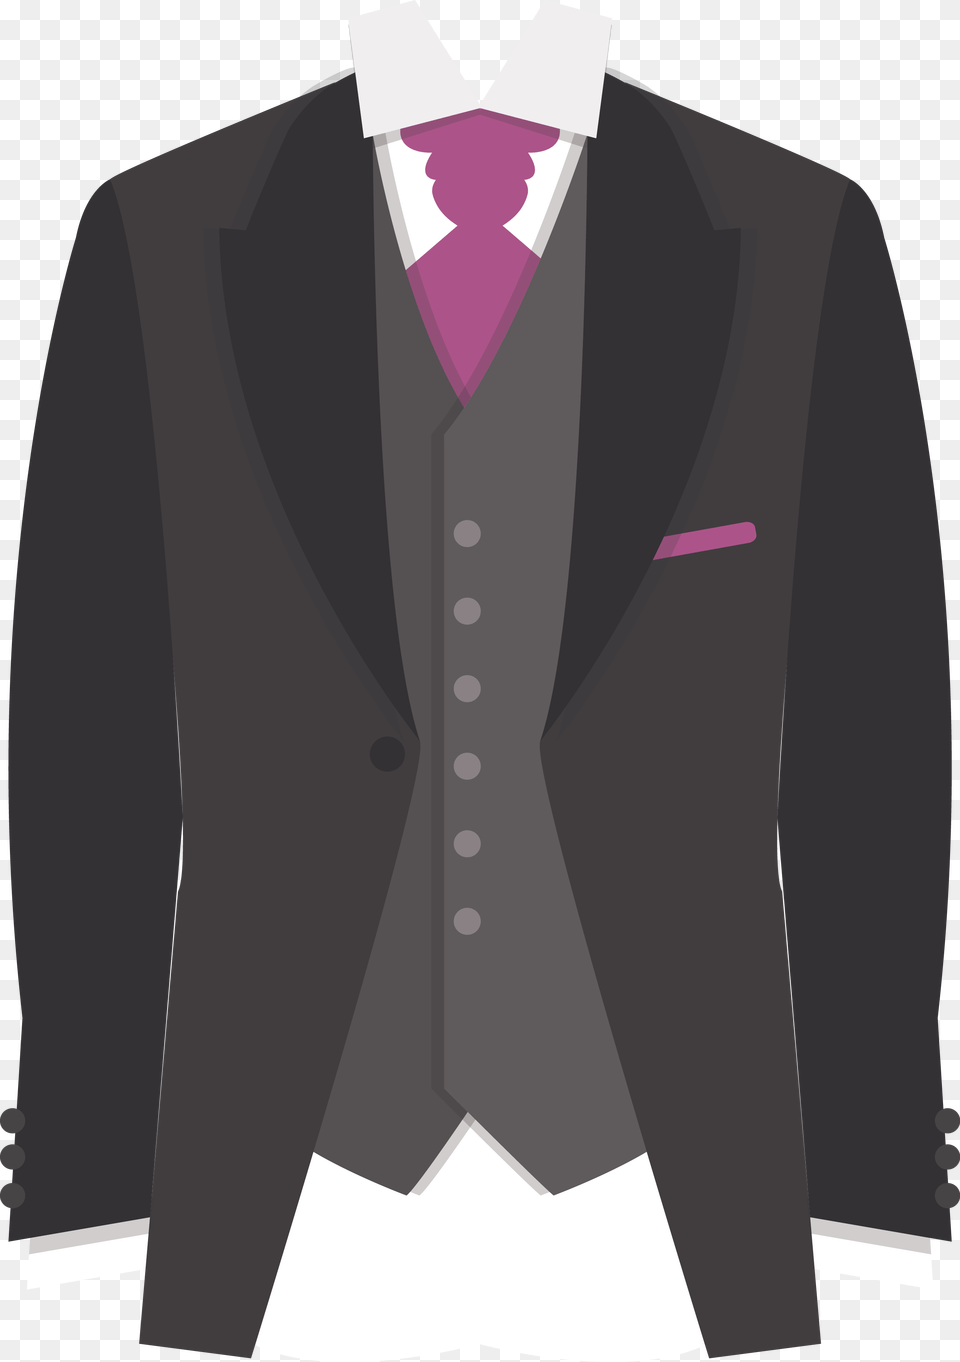 Suit Formal Wear Tuxedo, Accessories, Clothing, Formal Wear, Tie Png